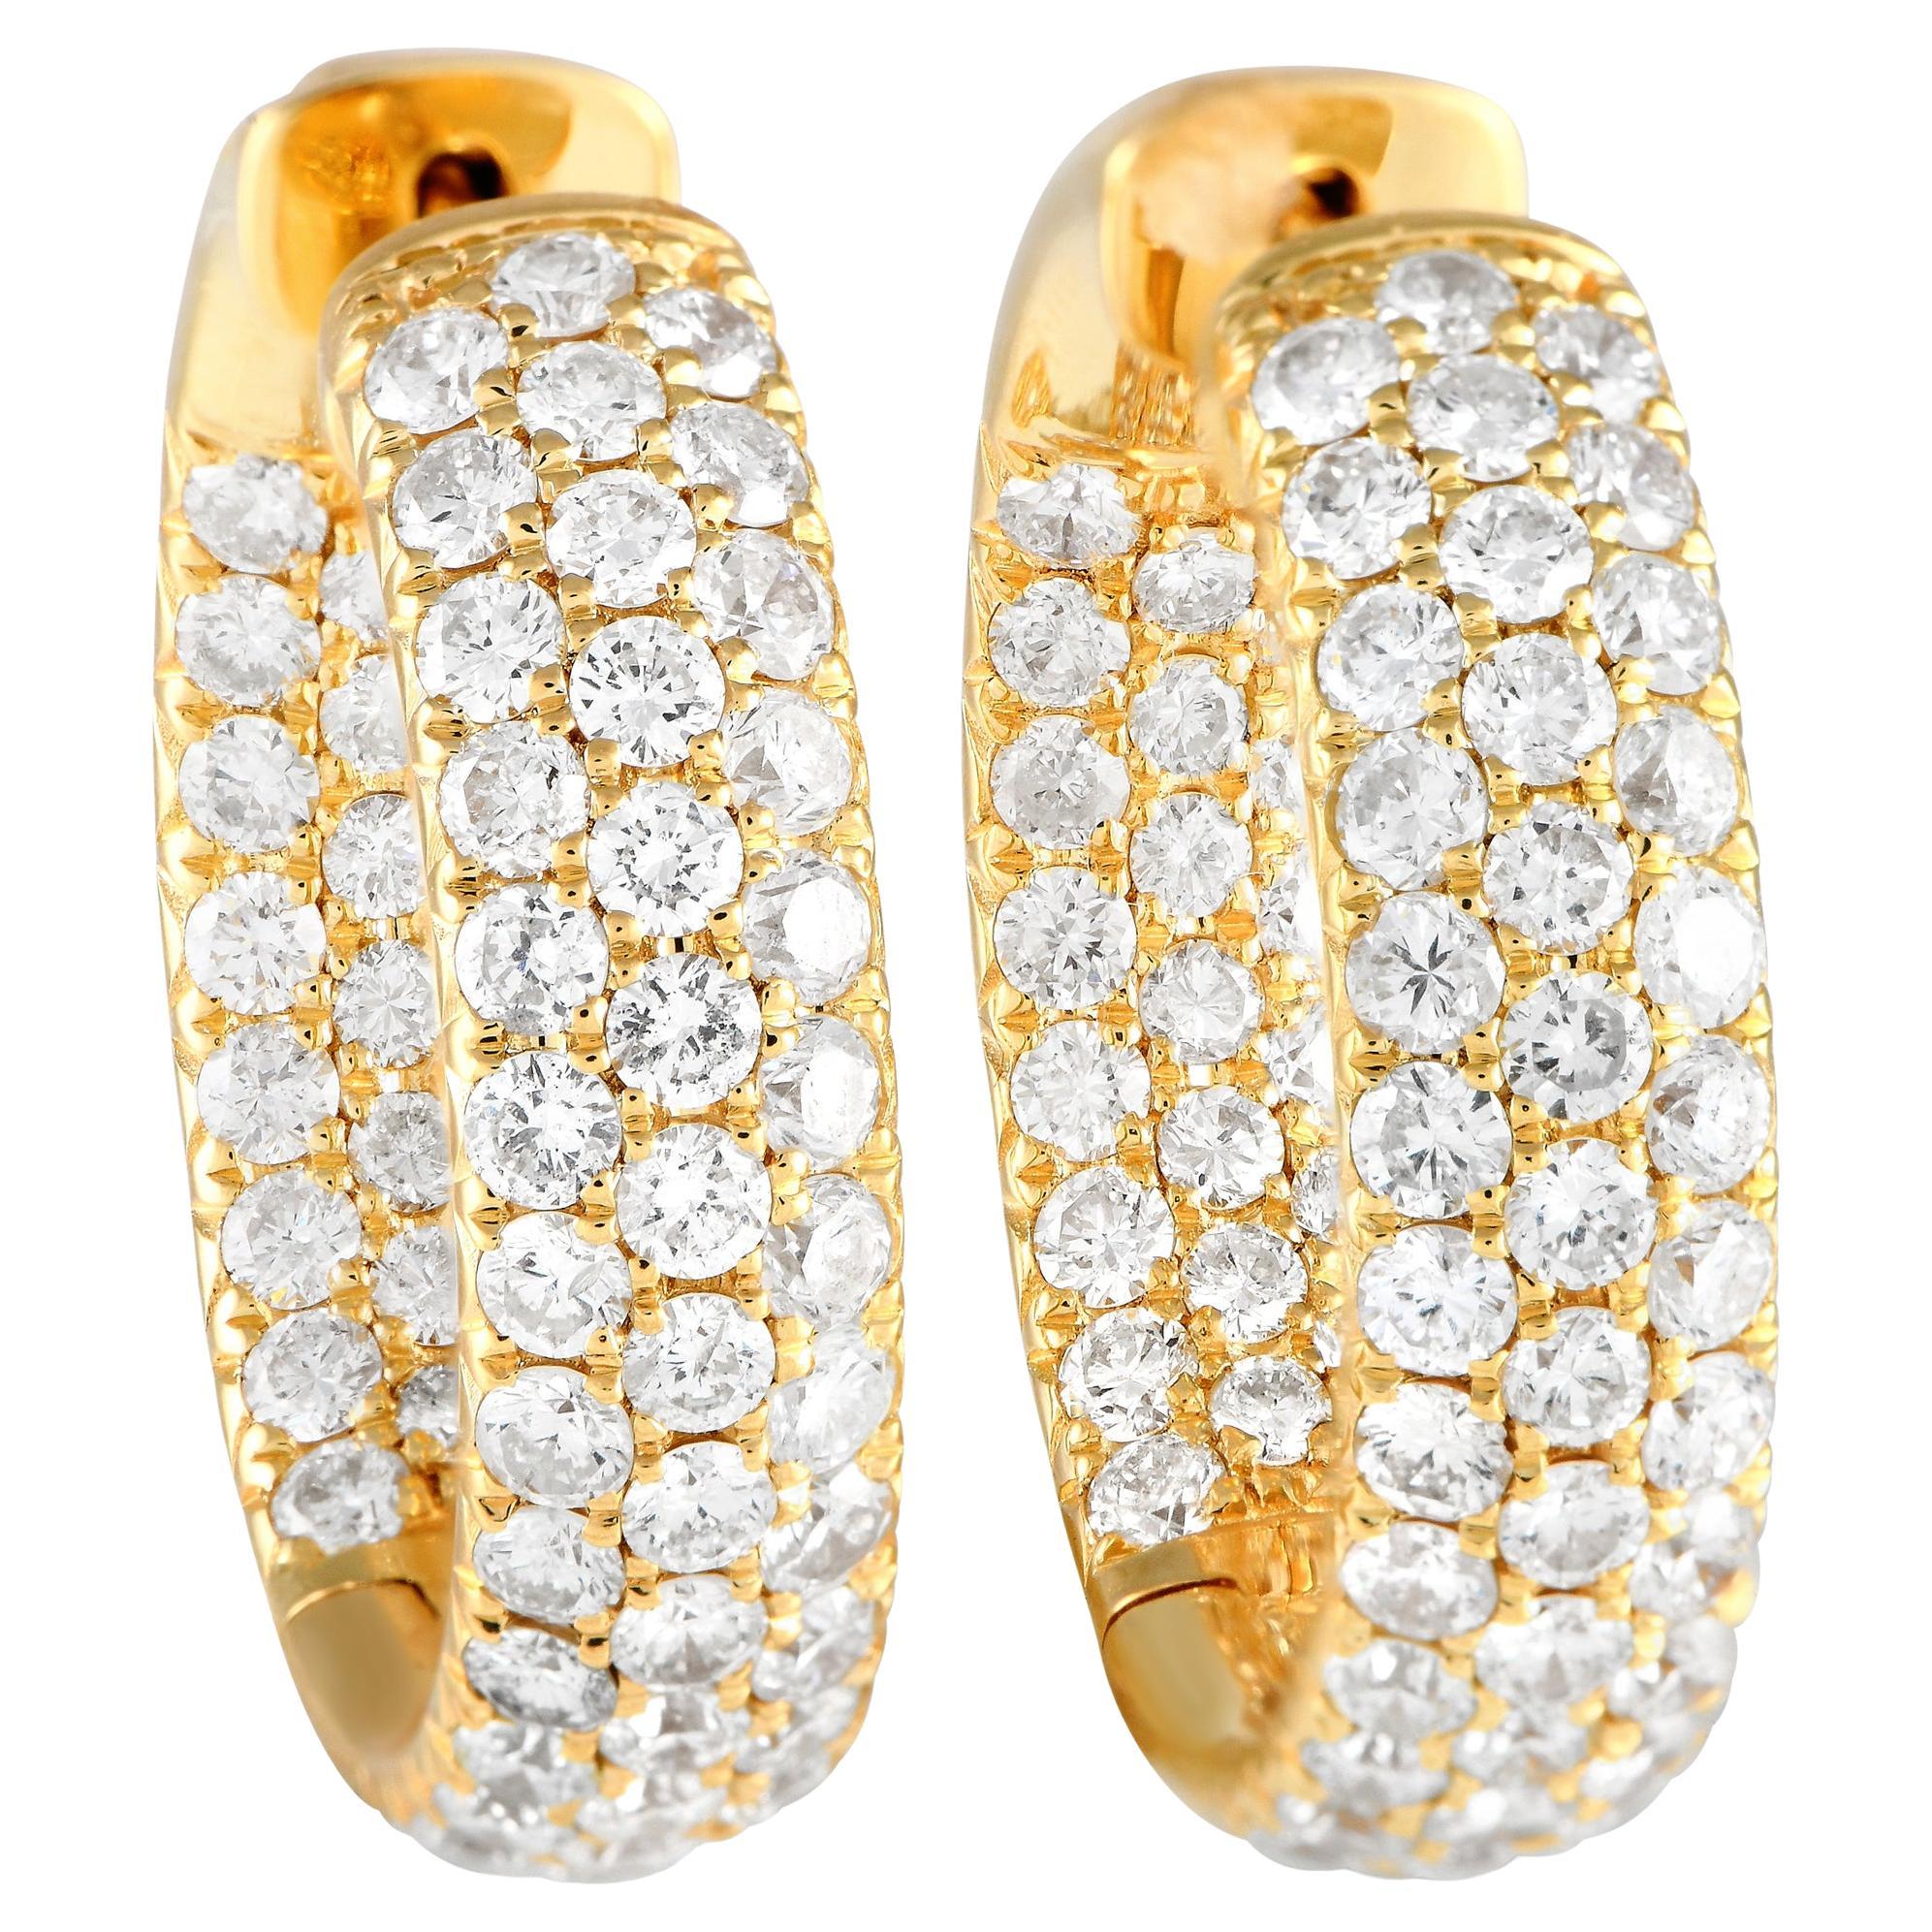 LB Exclusive 18K Yellow Gold 4.15 Carat Diamond Inside-Out Hoop Earrings